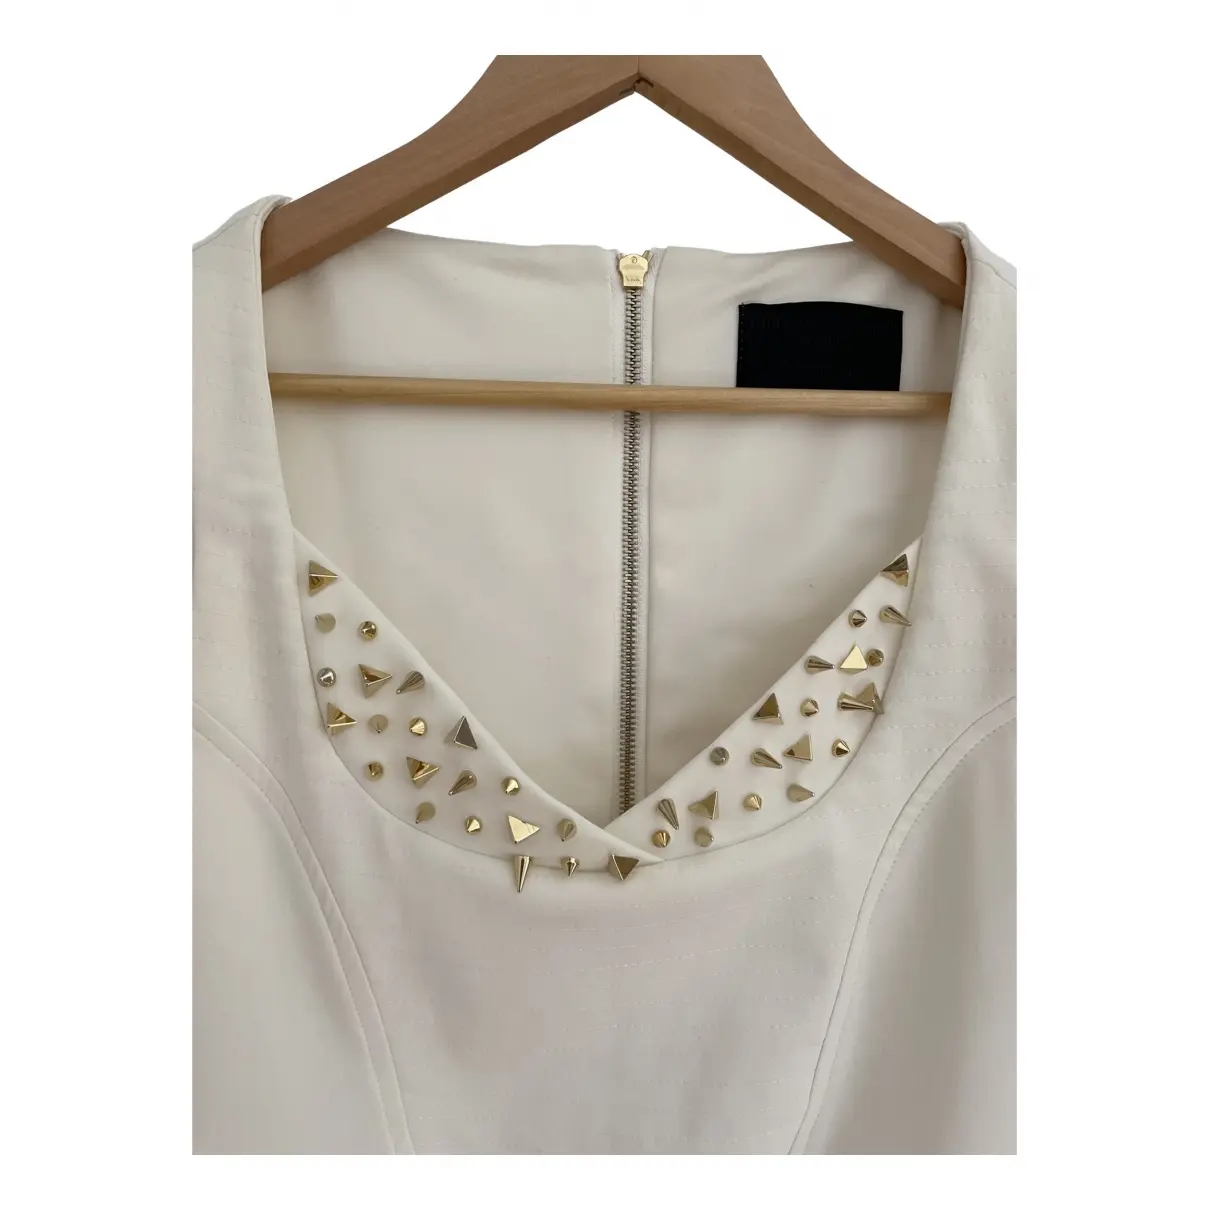 Buy Philipp Plein Mini dress online